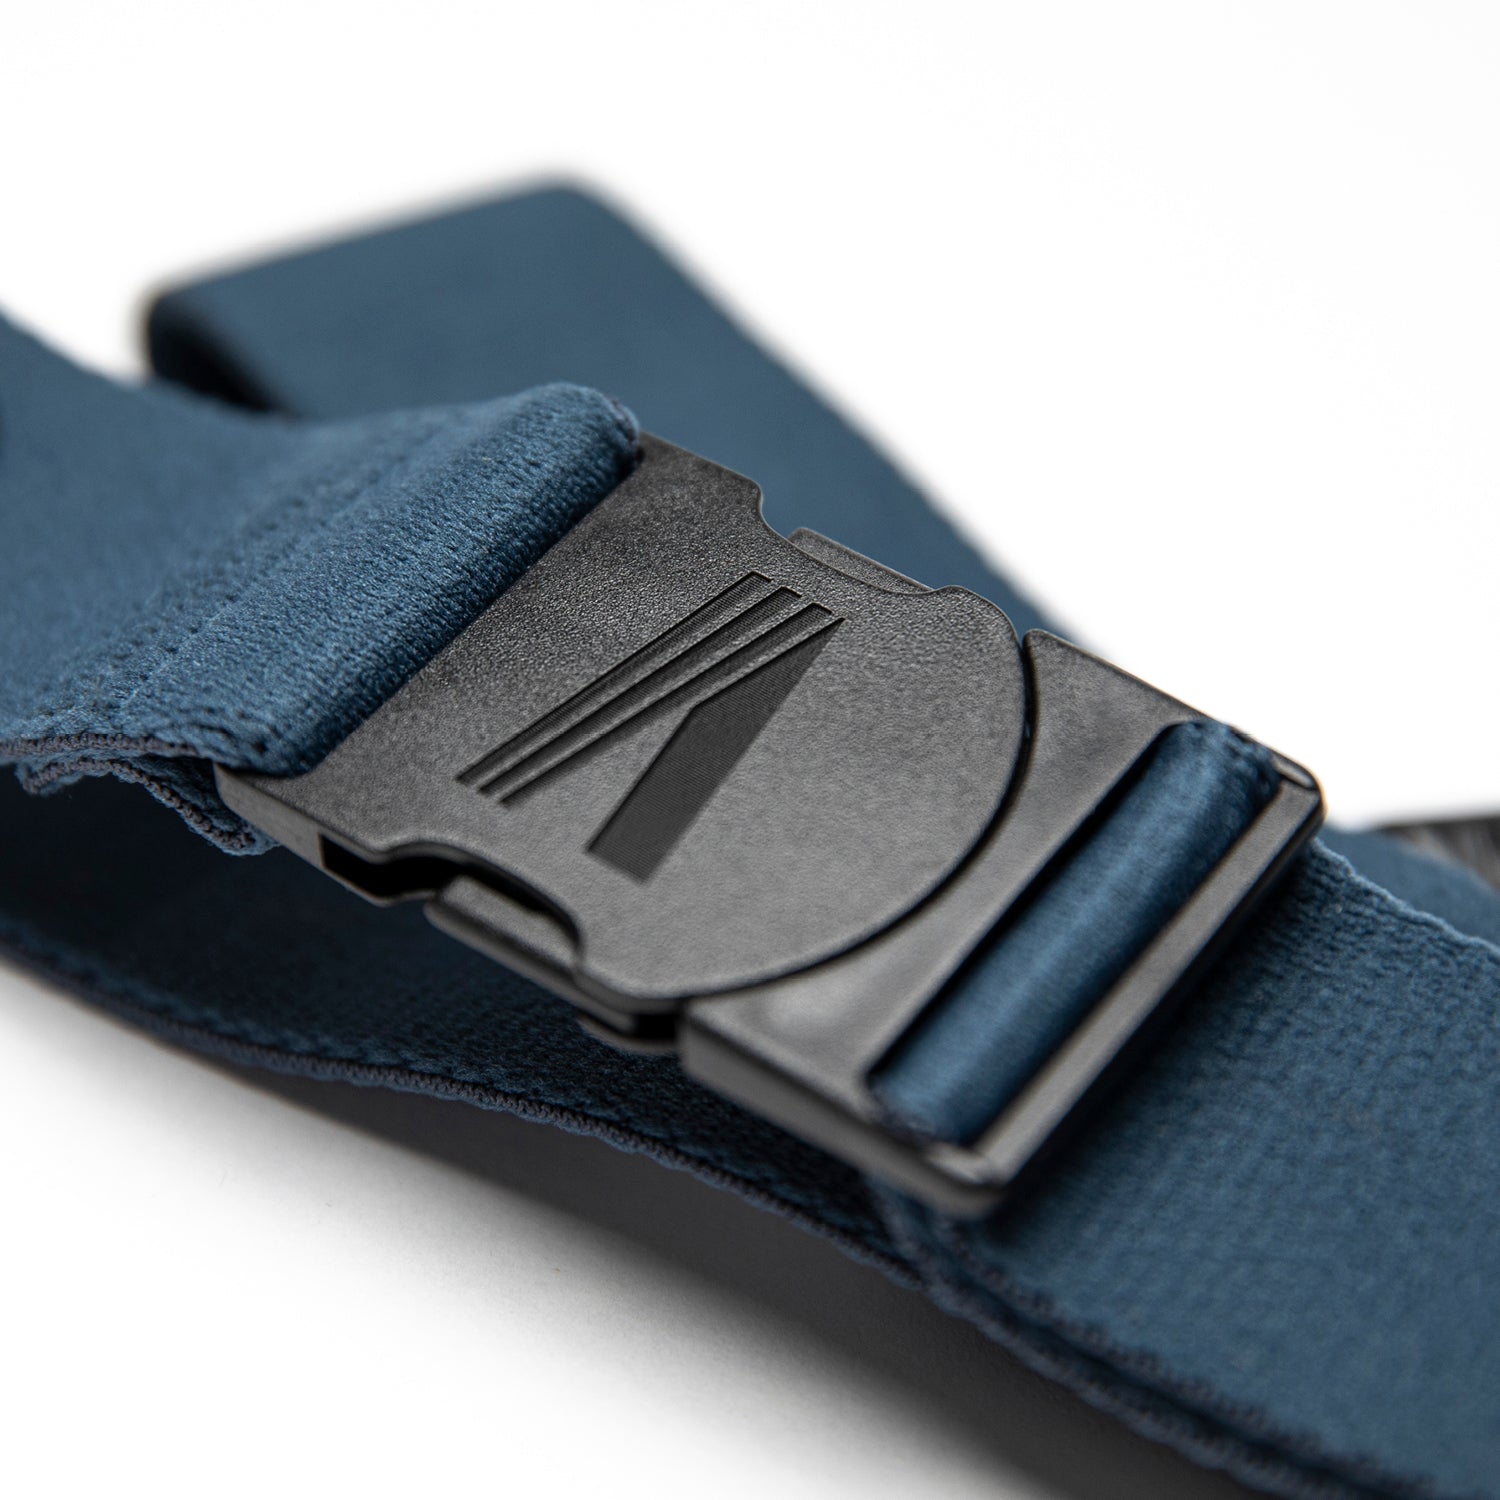 snap in place performance wear thin blue belt